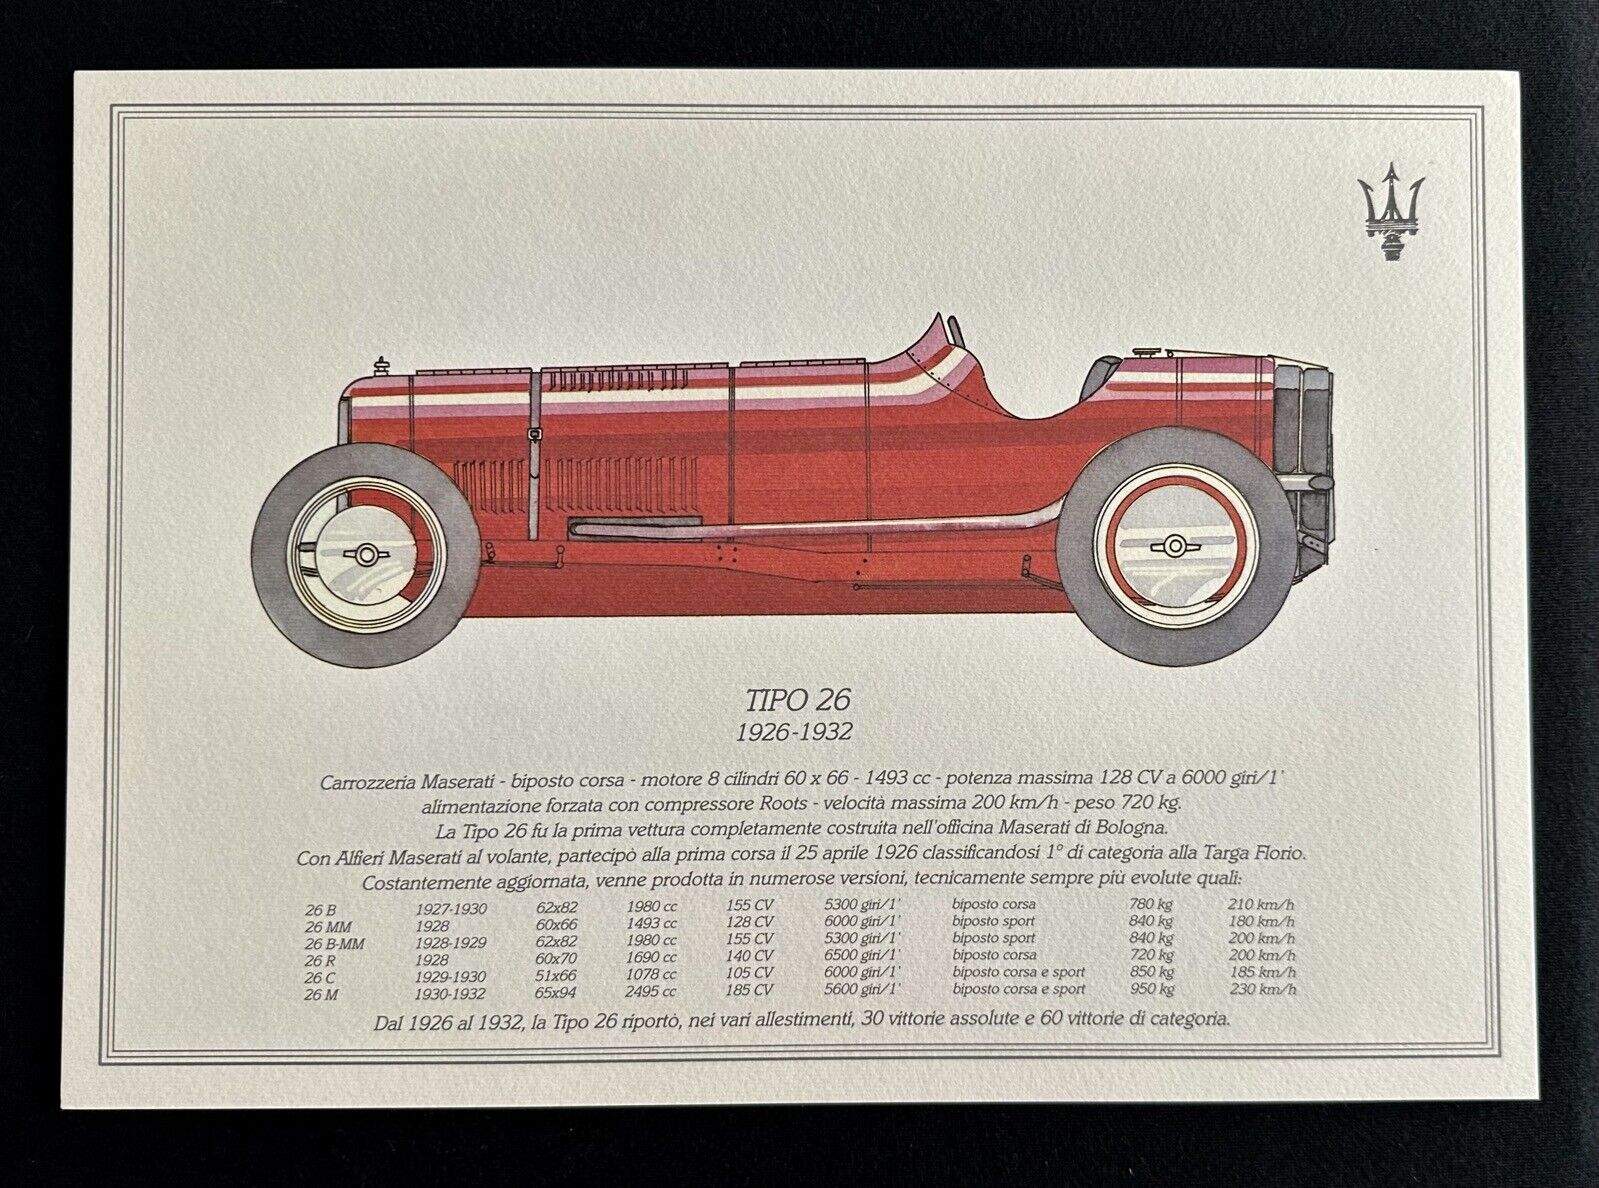 MASERATI Tipo 26 Race Car 1926-1932 Technical Art Print Specs Italian Text